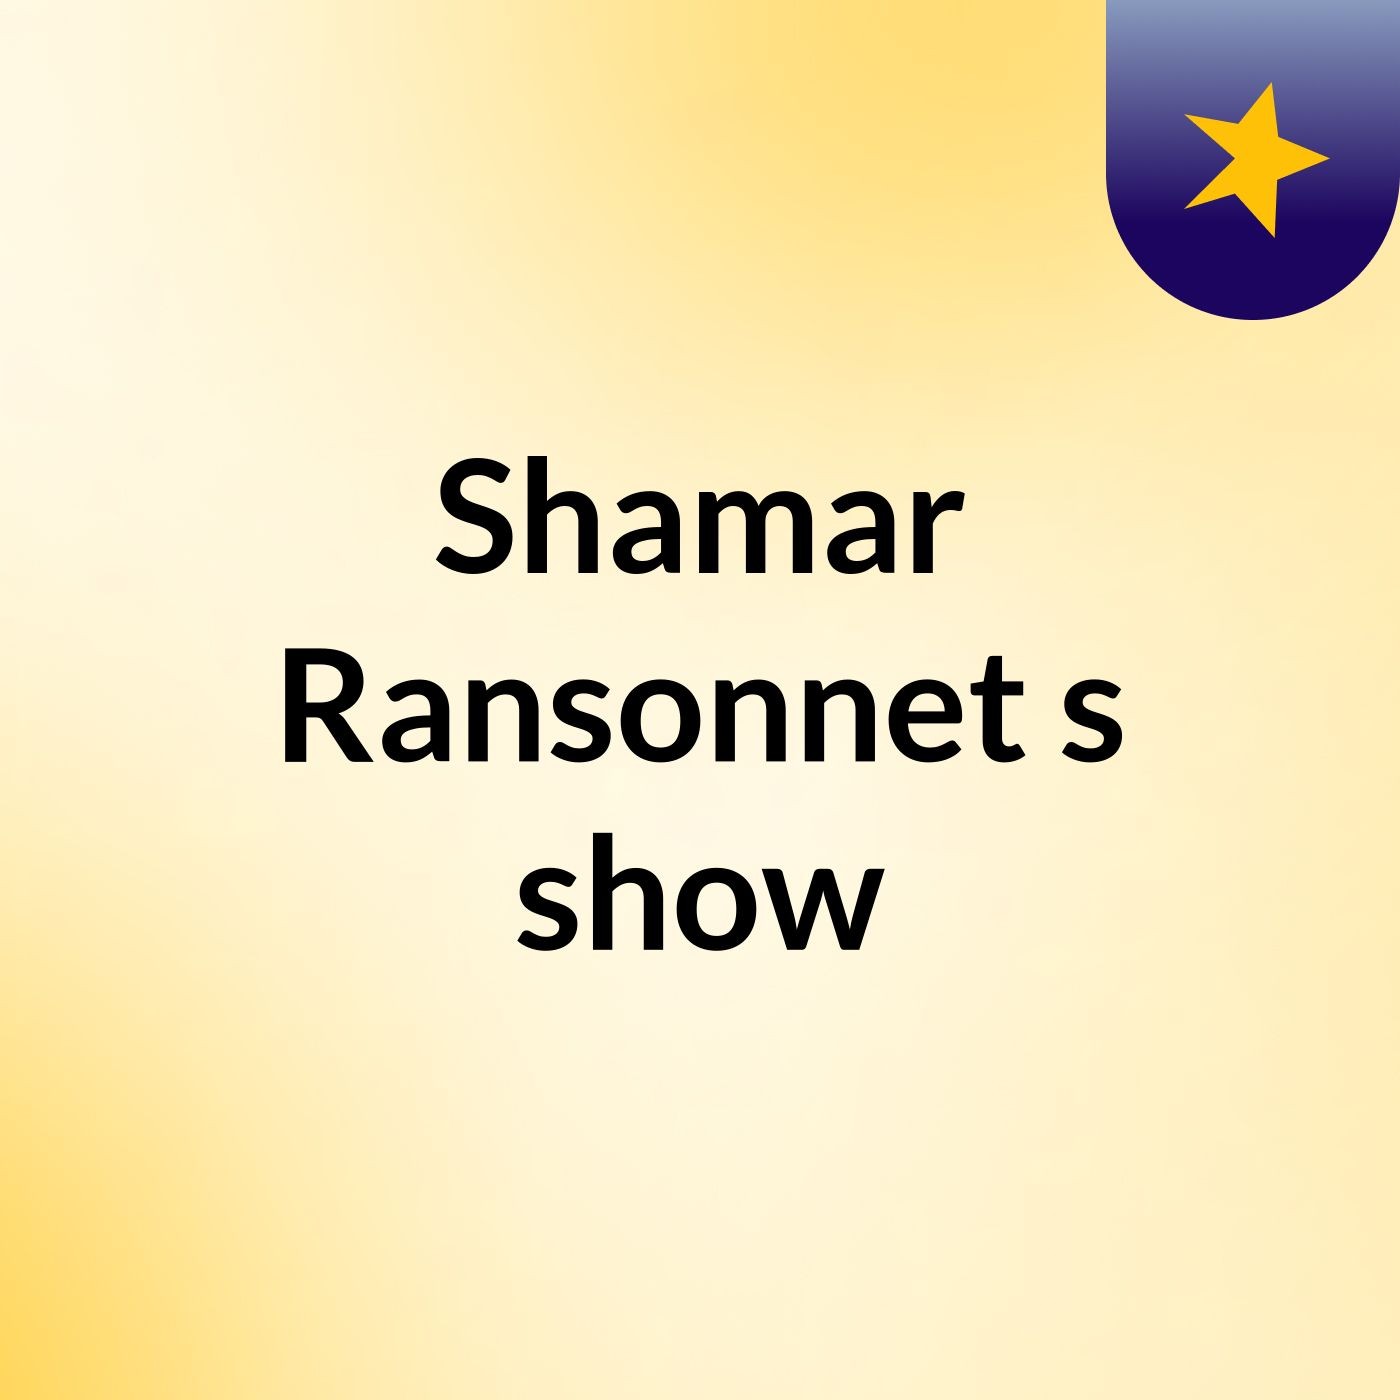 Shamar Ransonnet's show